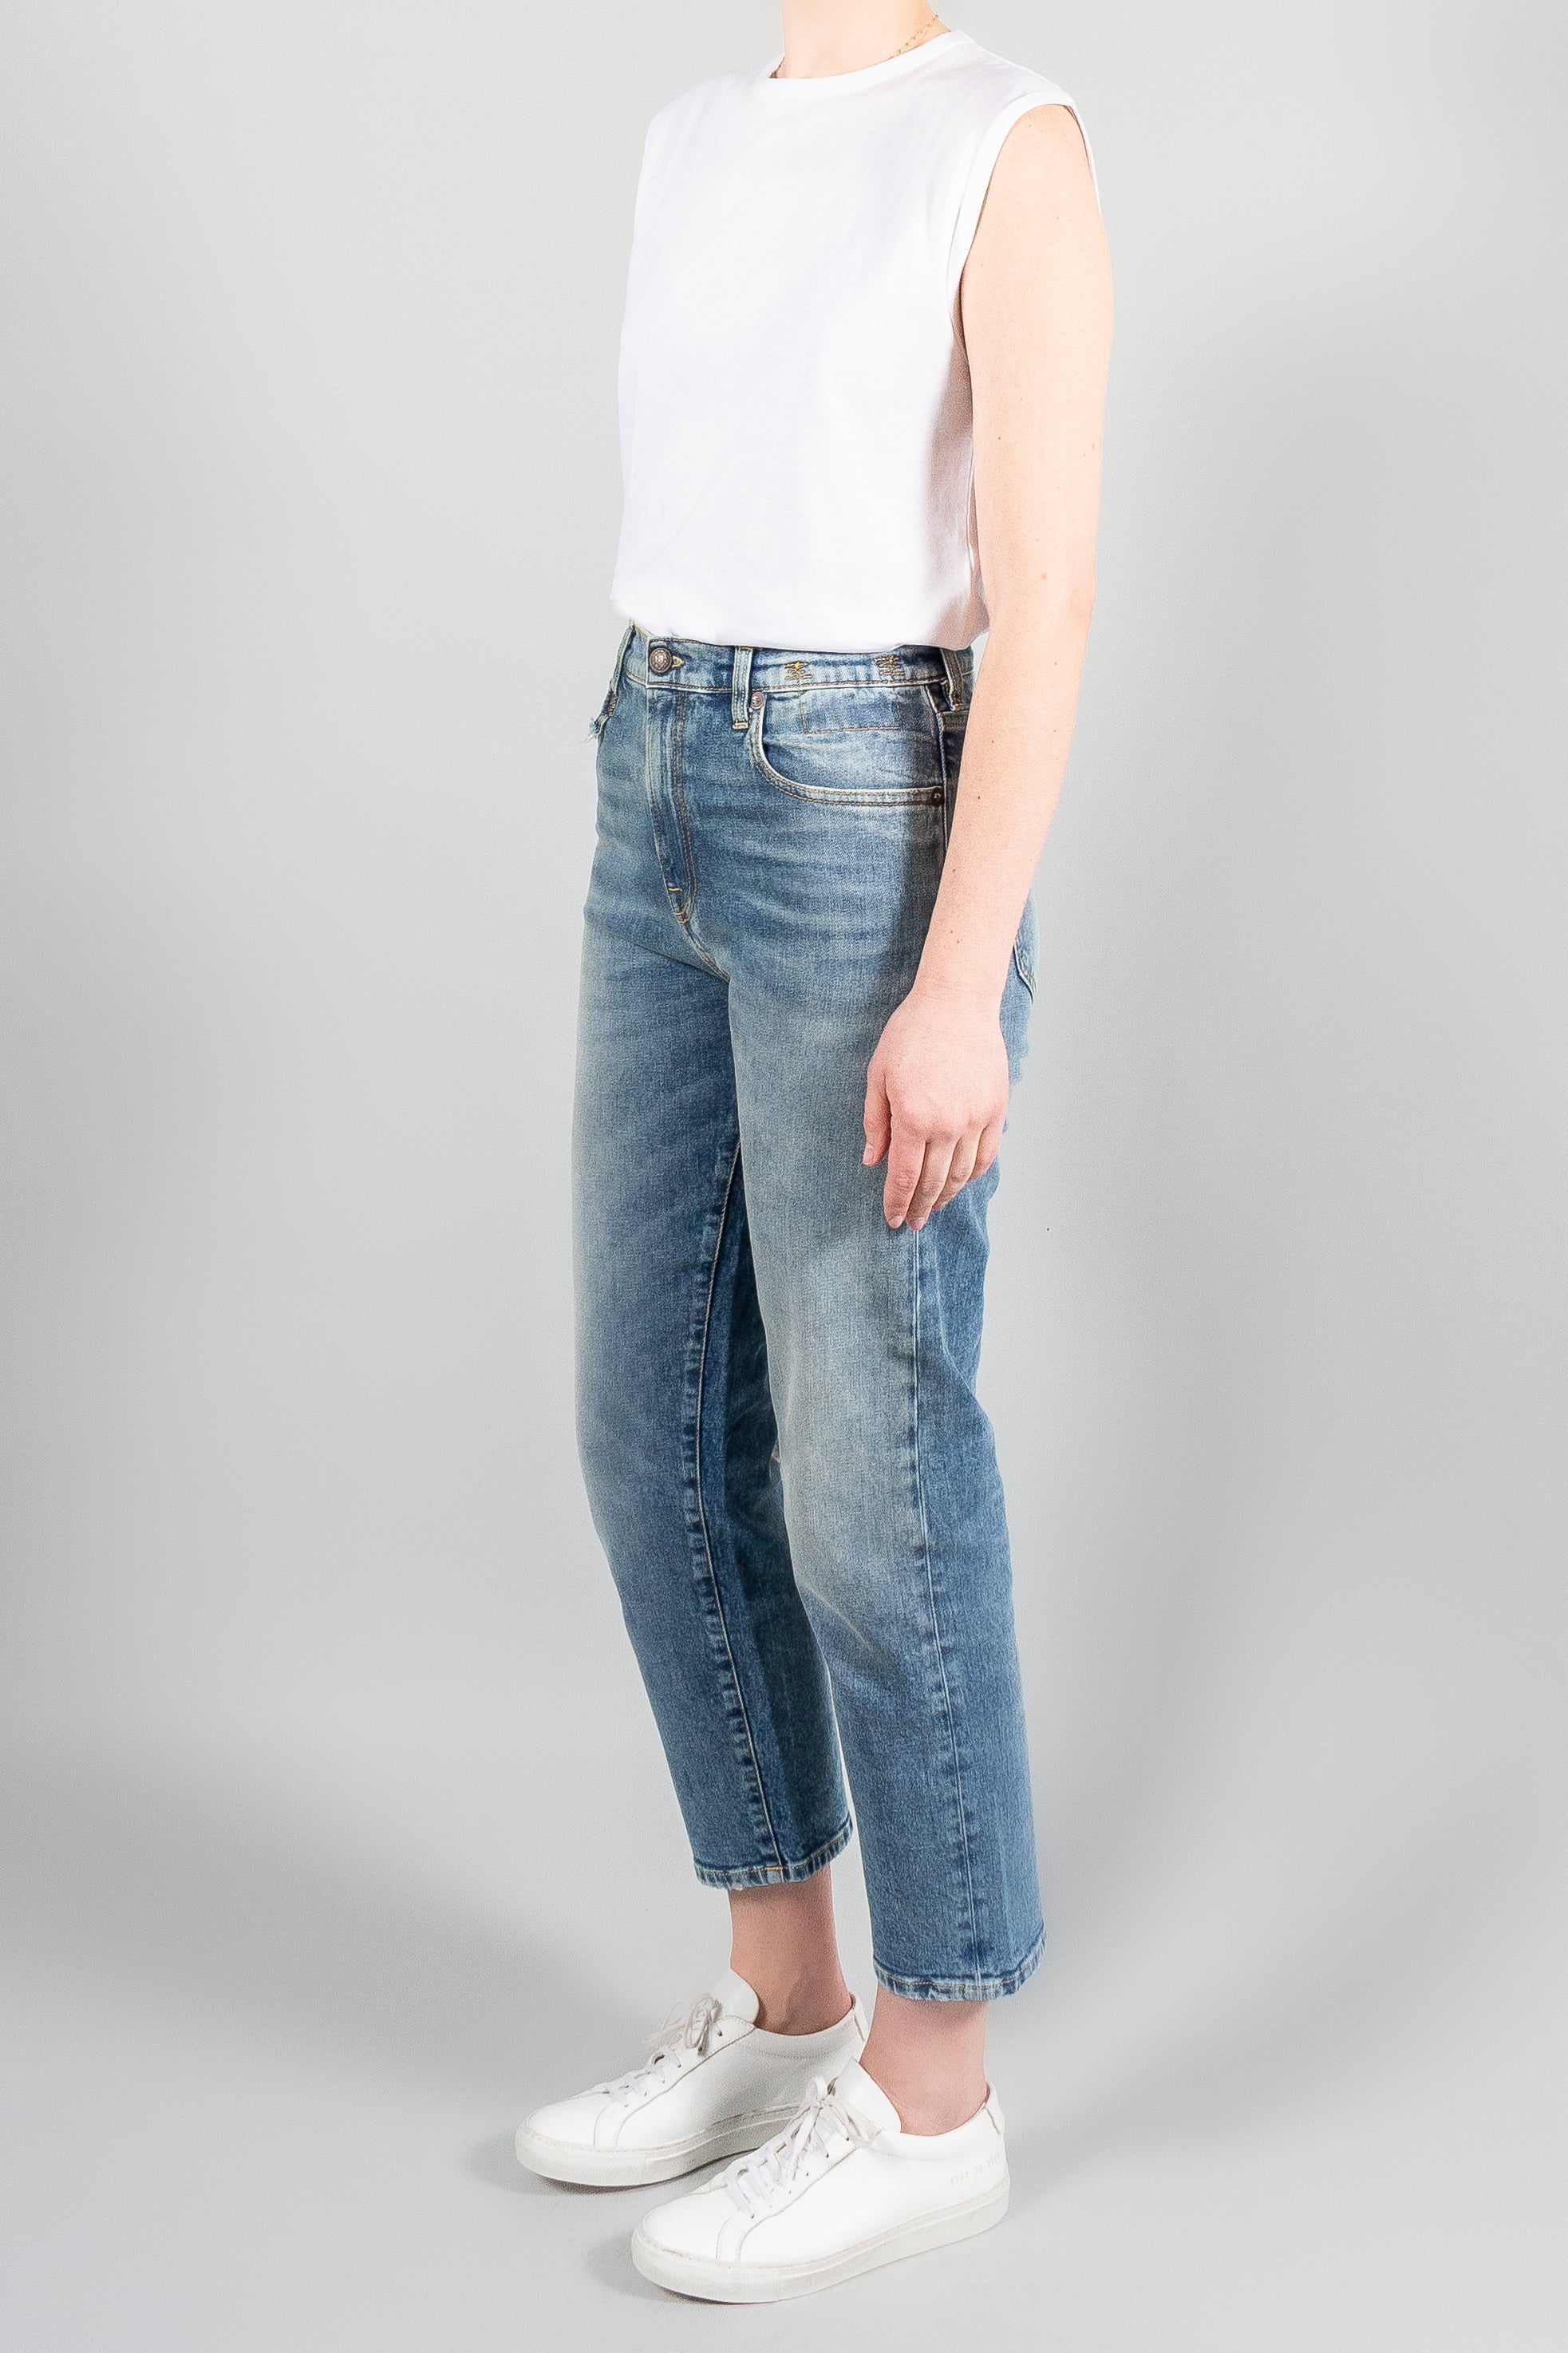 R13 Shelley Slim Jeans-Denim-Misch-Vancouver-Canada